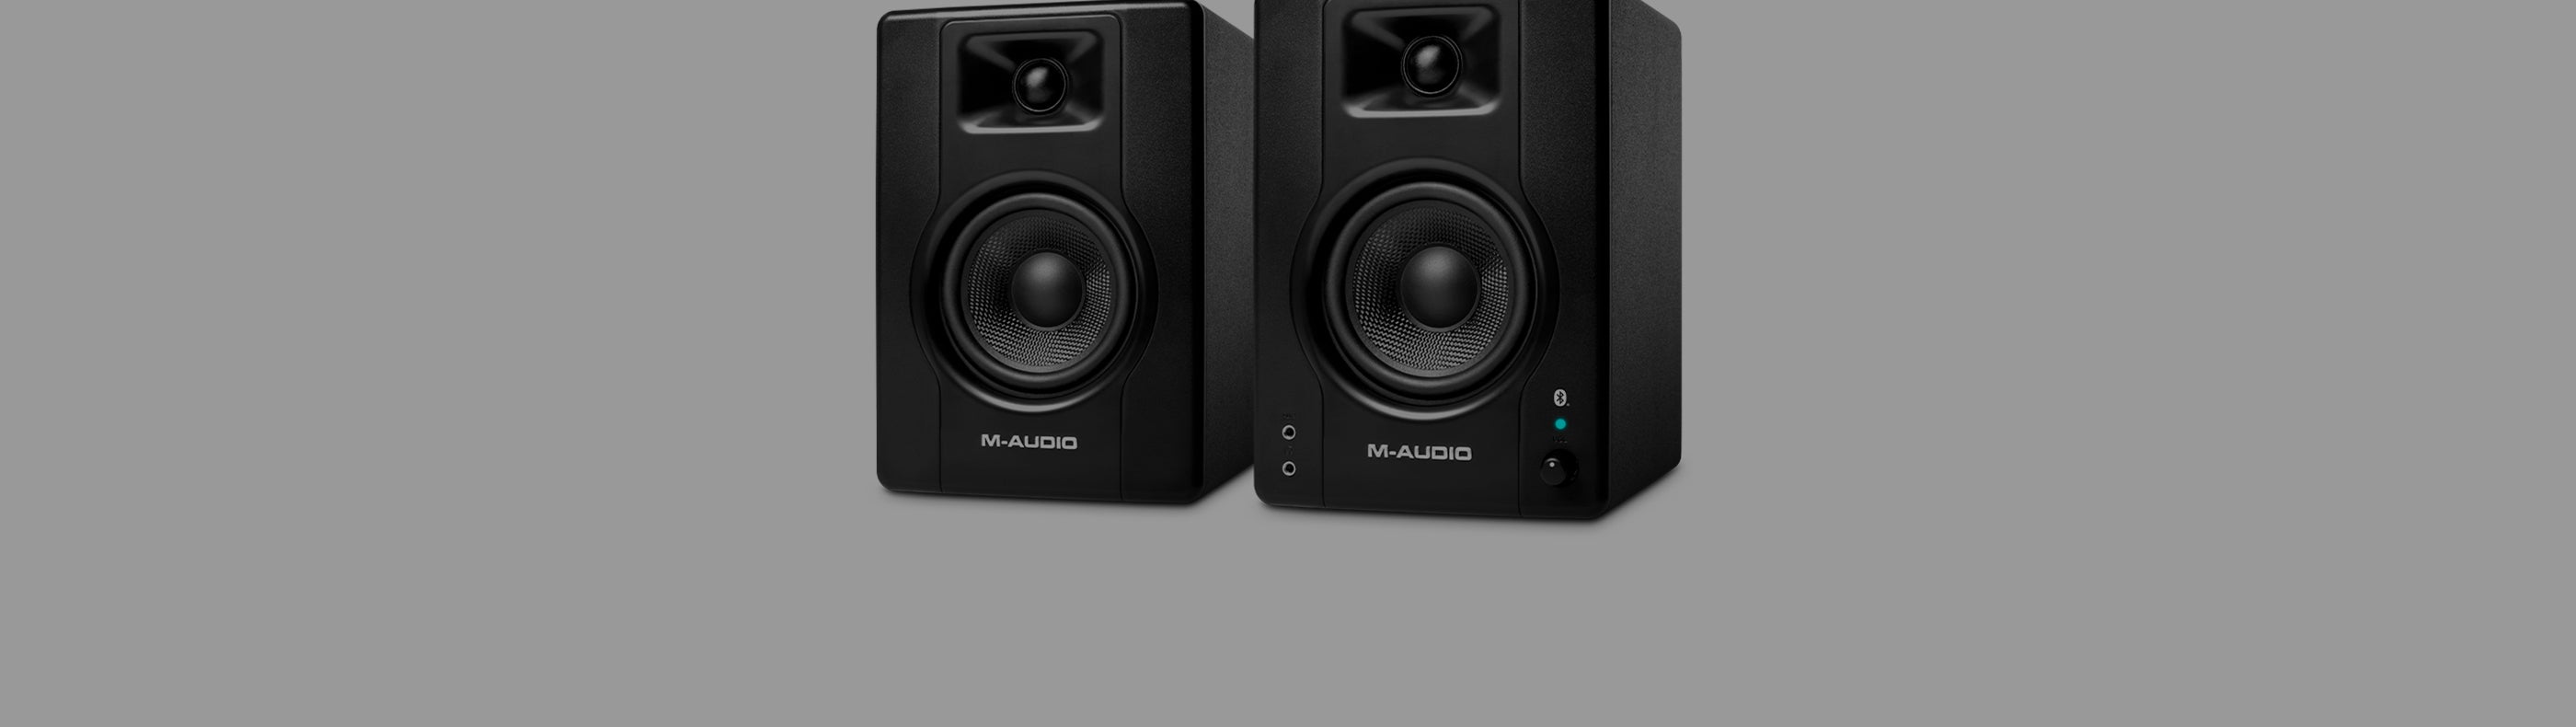 M-Audio BX BT Series